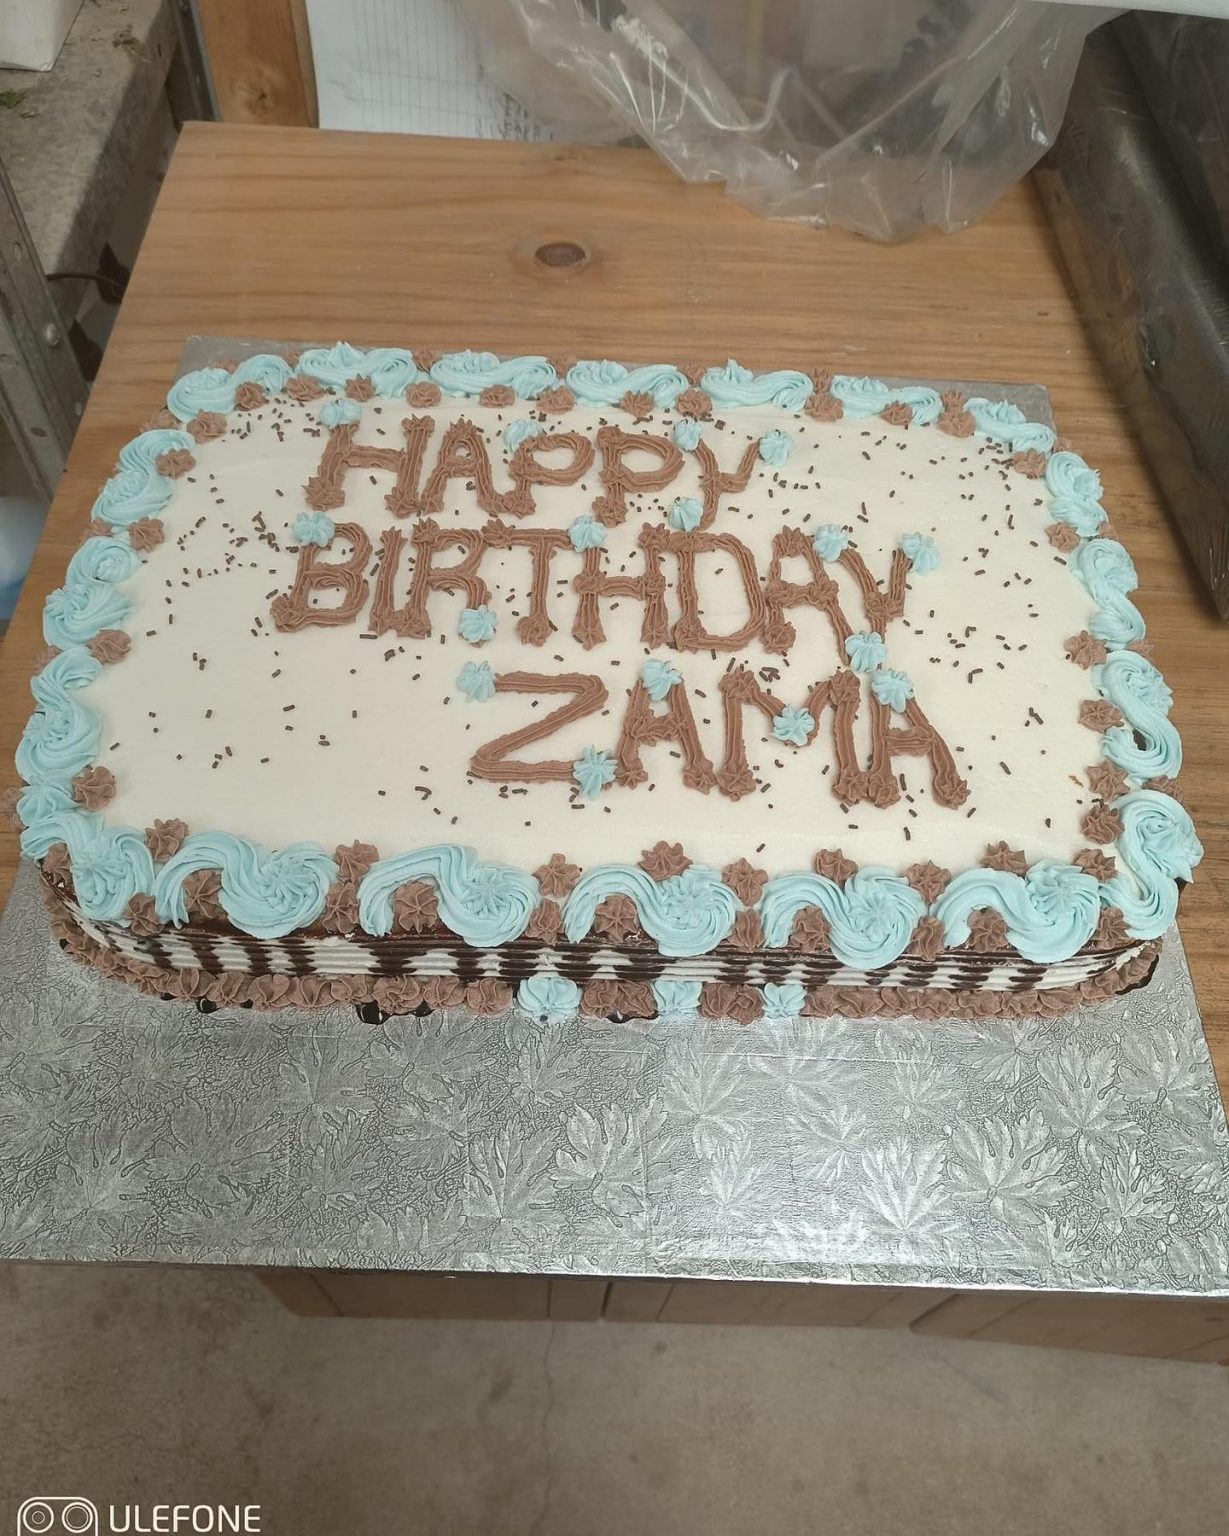 Zama's Birthday Cake!